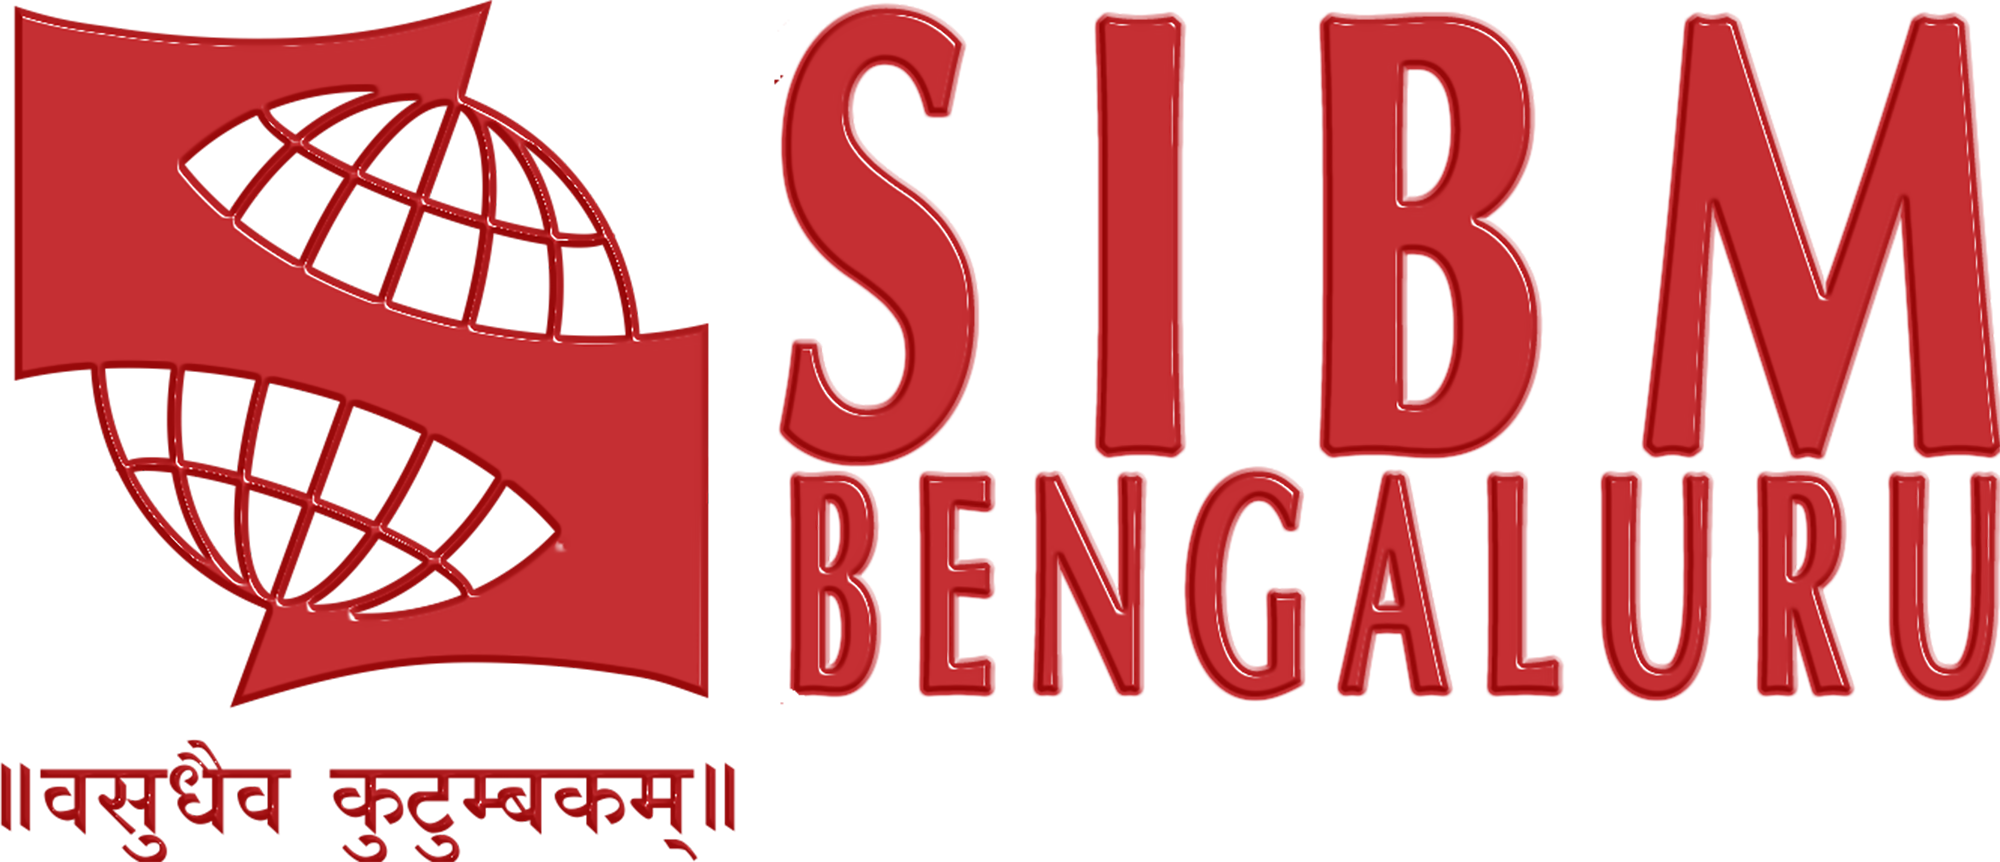 SIBM, Bengaluru